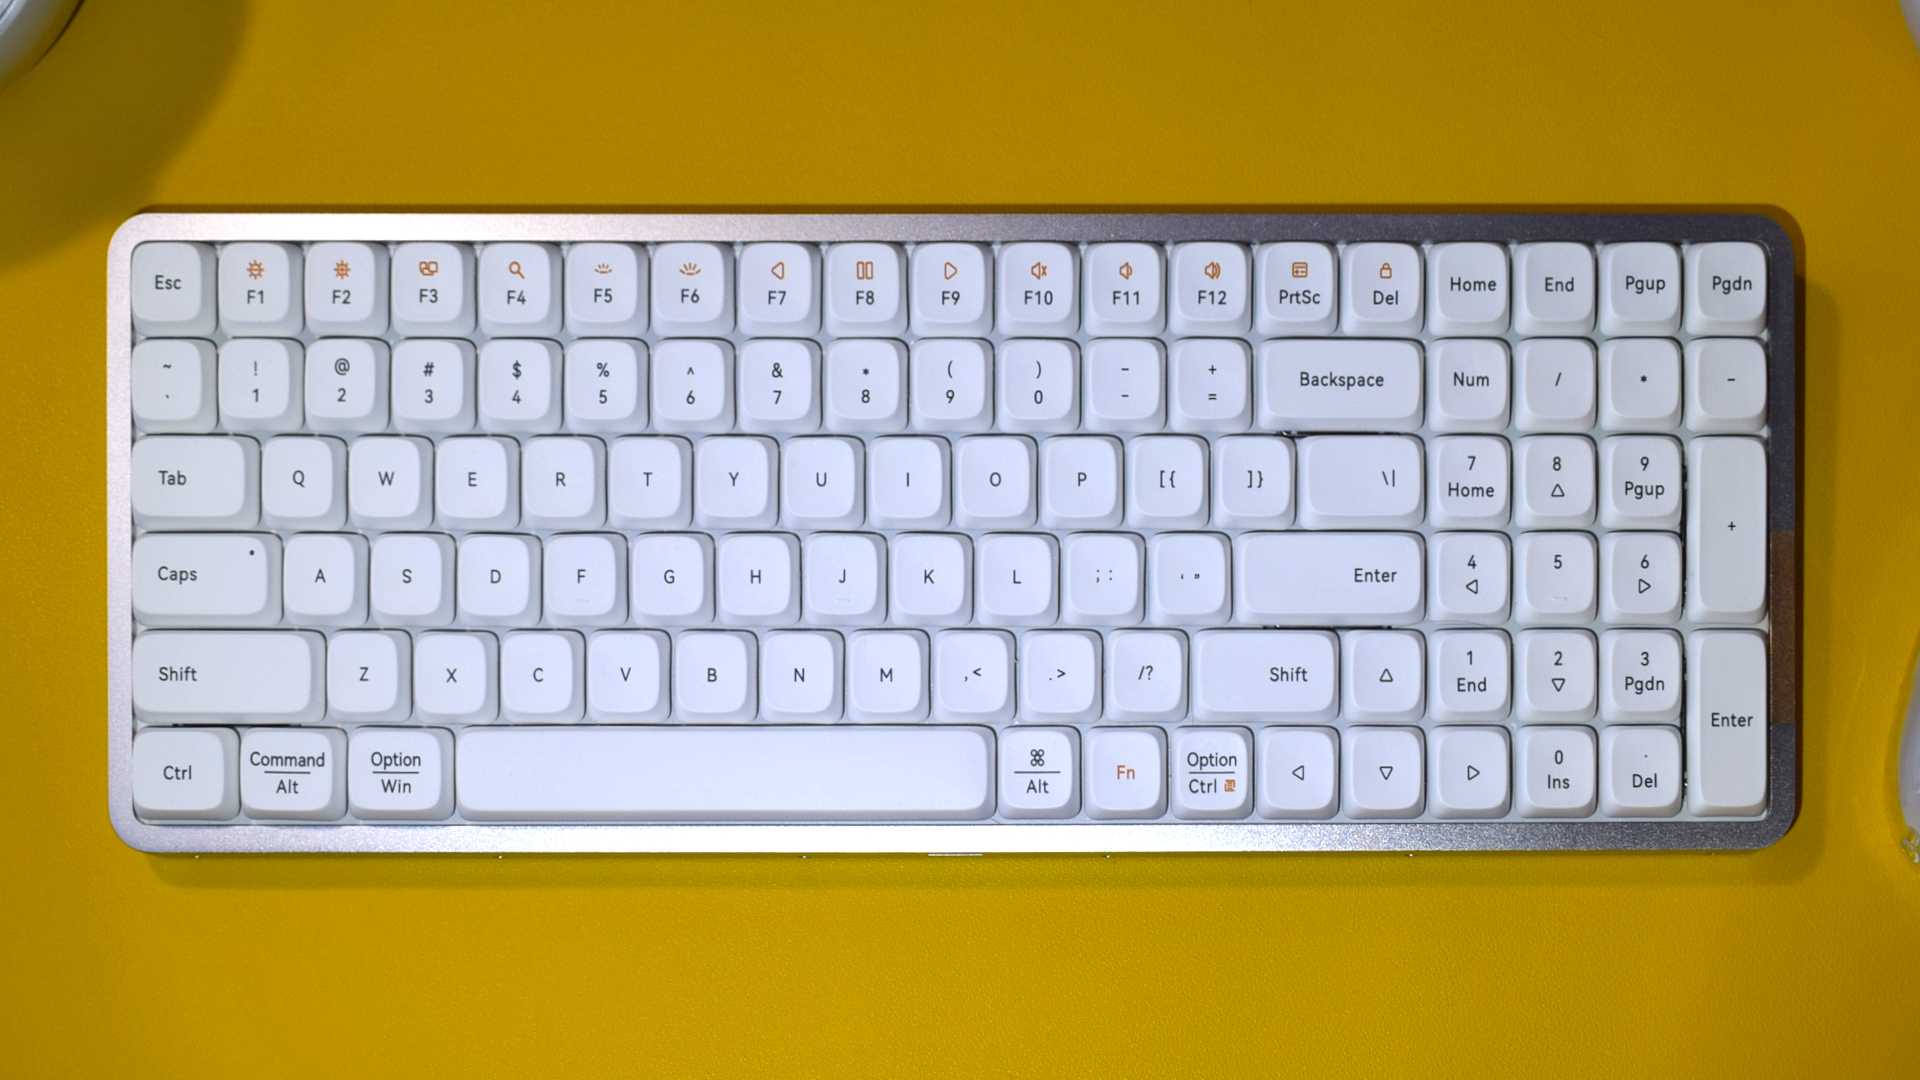 Lofree Flow mechanical wireless keyboard photograph showing full keyboard